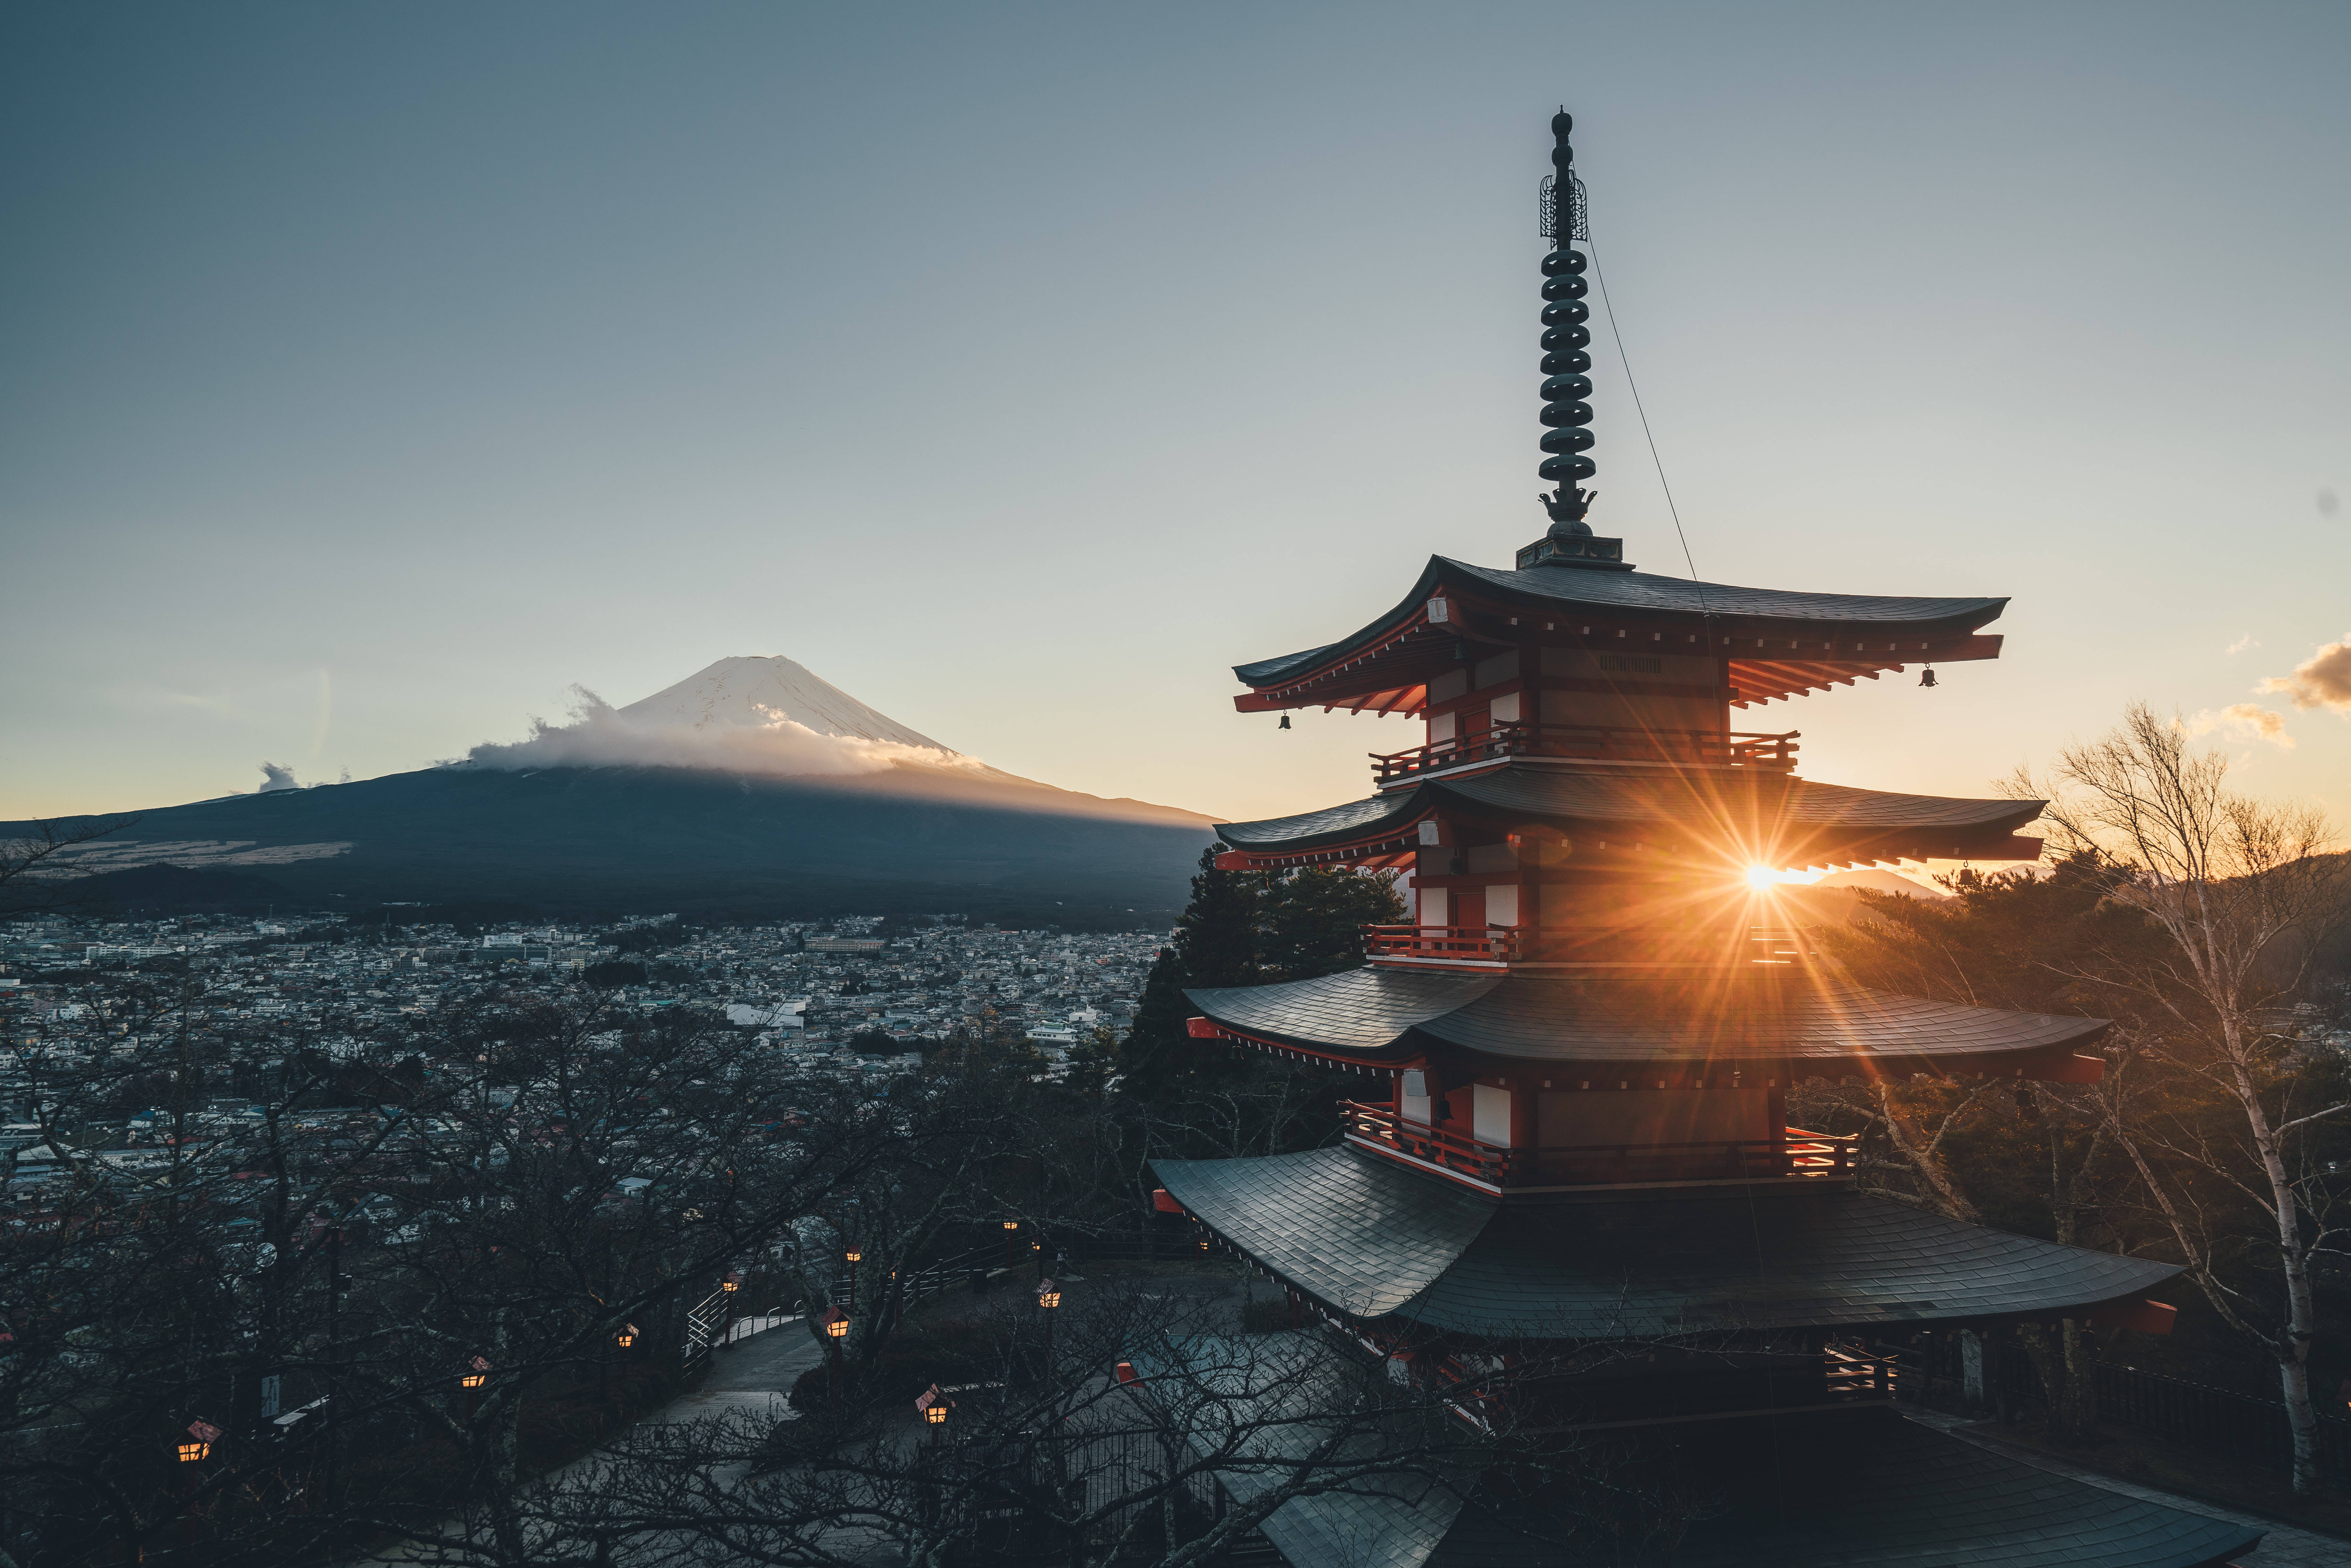 Japanese Hd Chureito Pagoda And Mount Fuji Sunset Picture